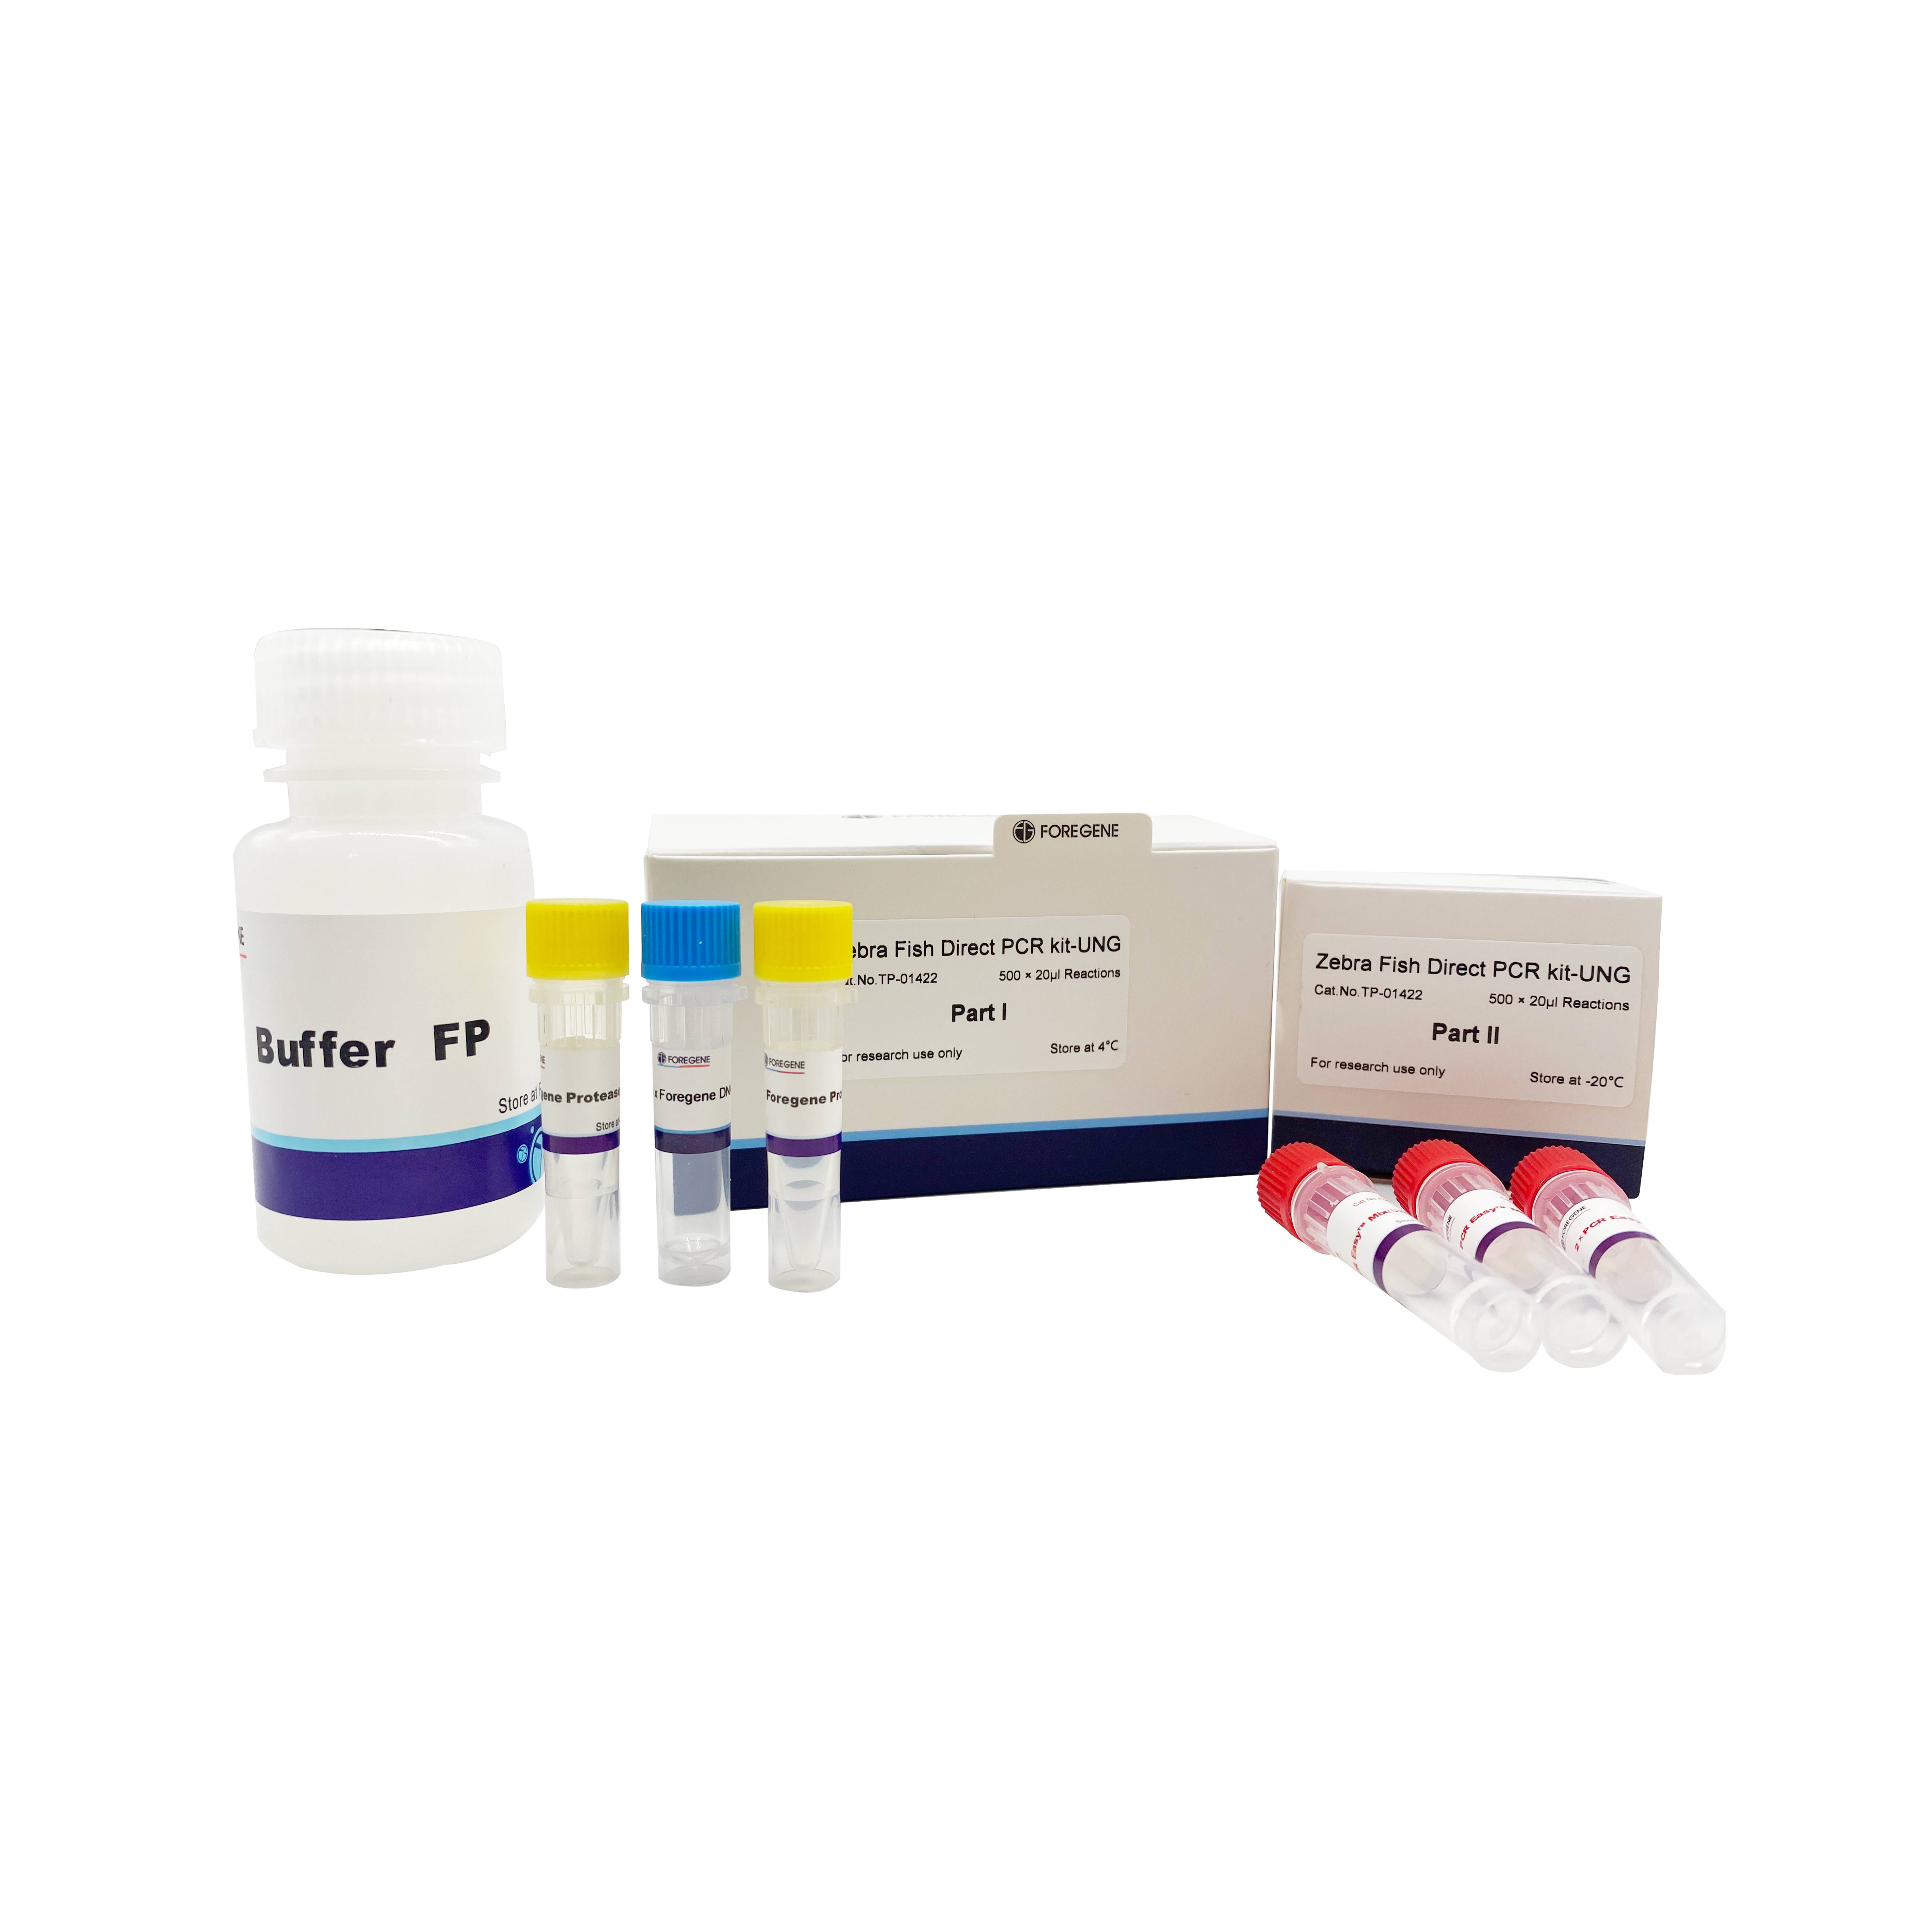 Zebra Fish Direct PCR Kit-UNG Direct PCR Lysis Reagent (zebrafish)